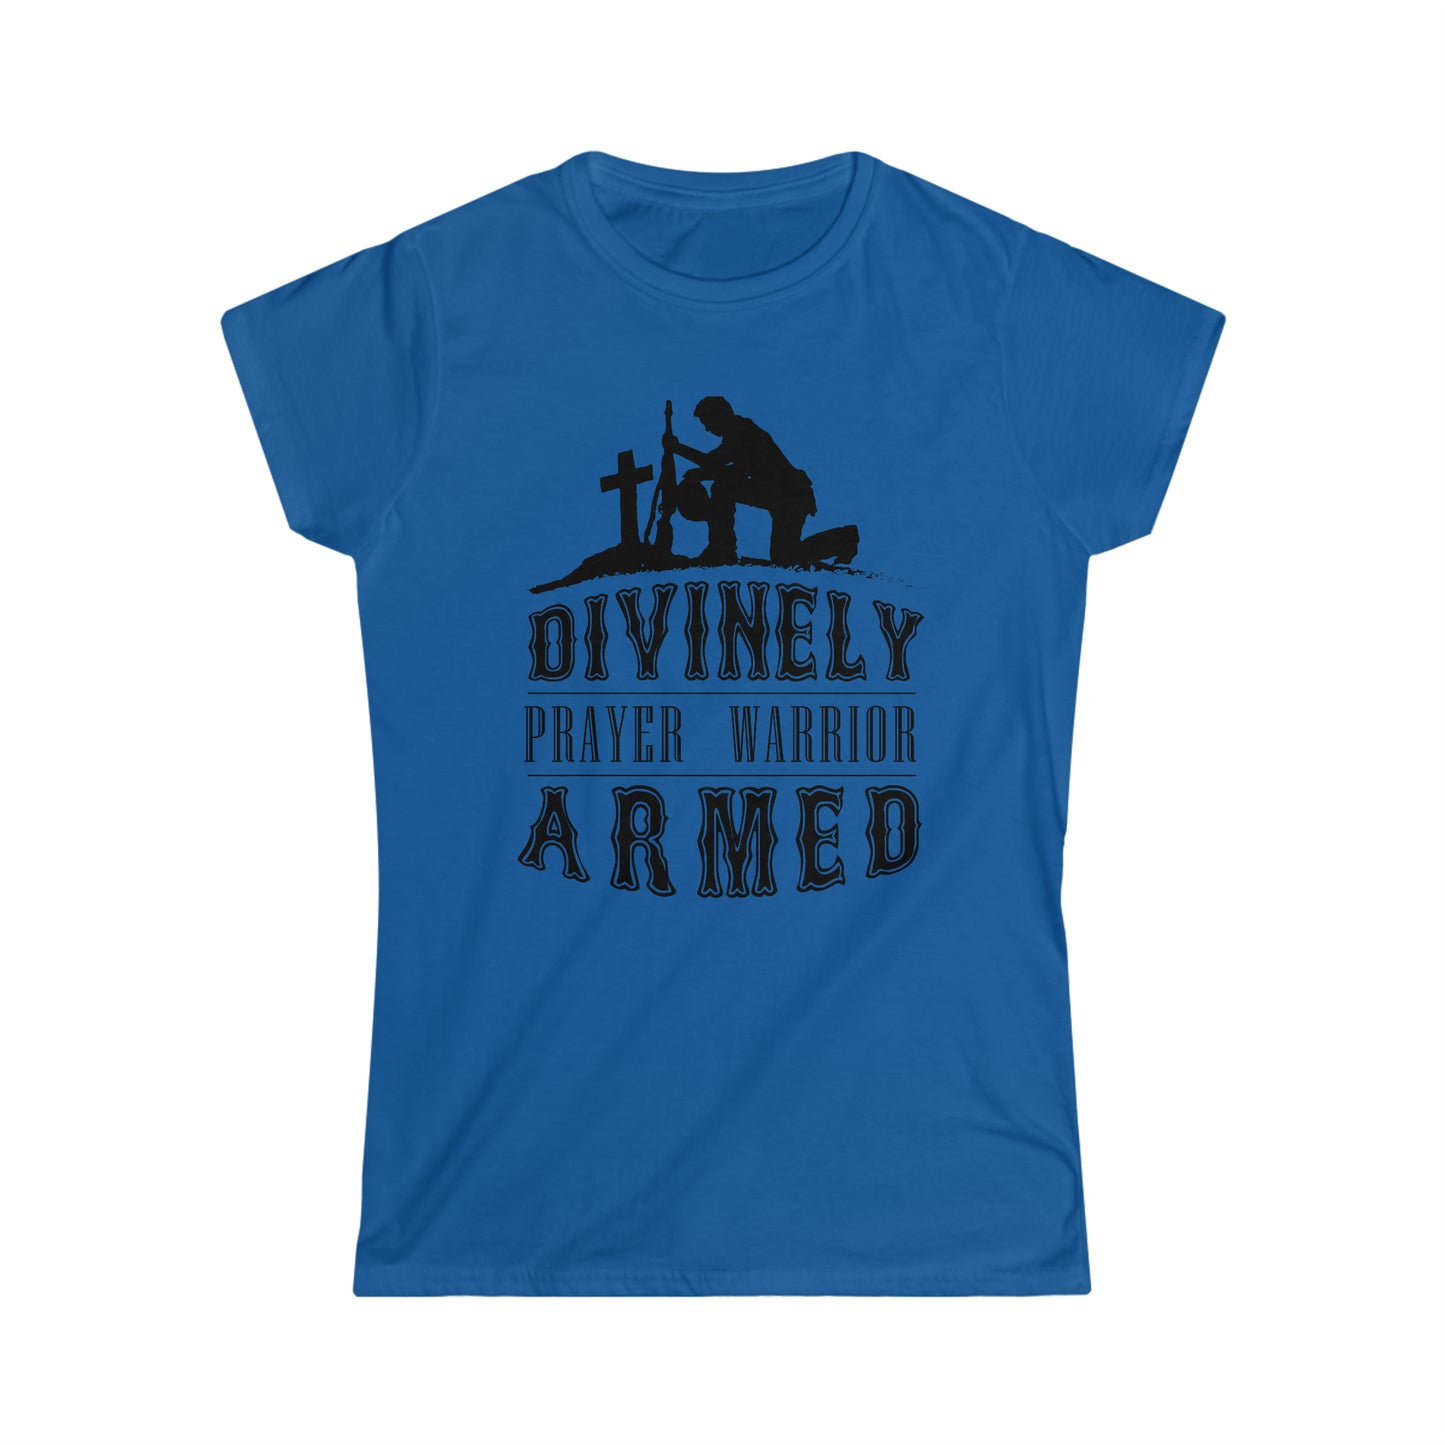 Divinely armed prayer warrior Women's T-shirt